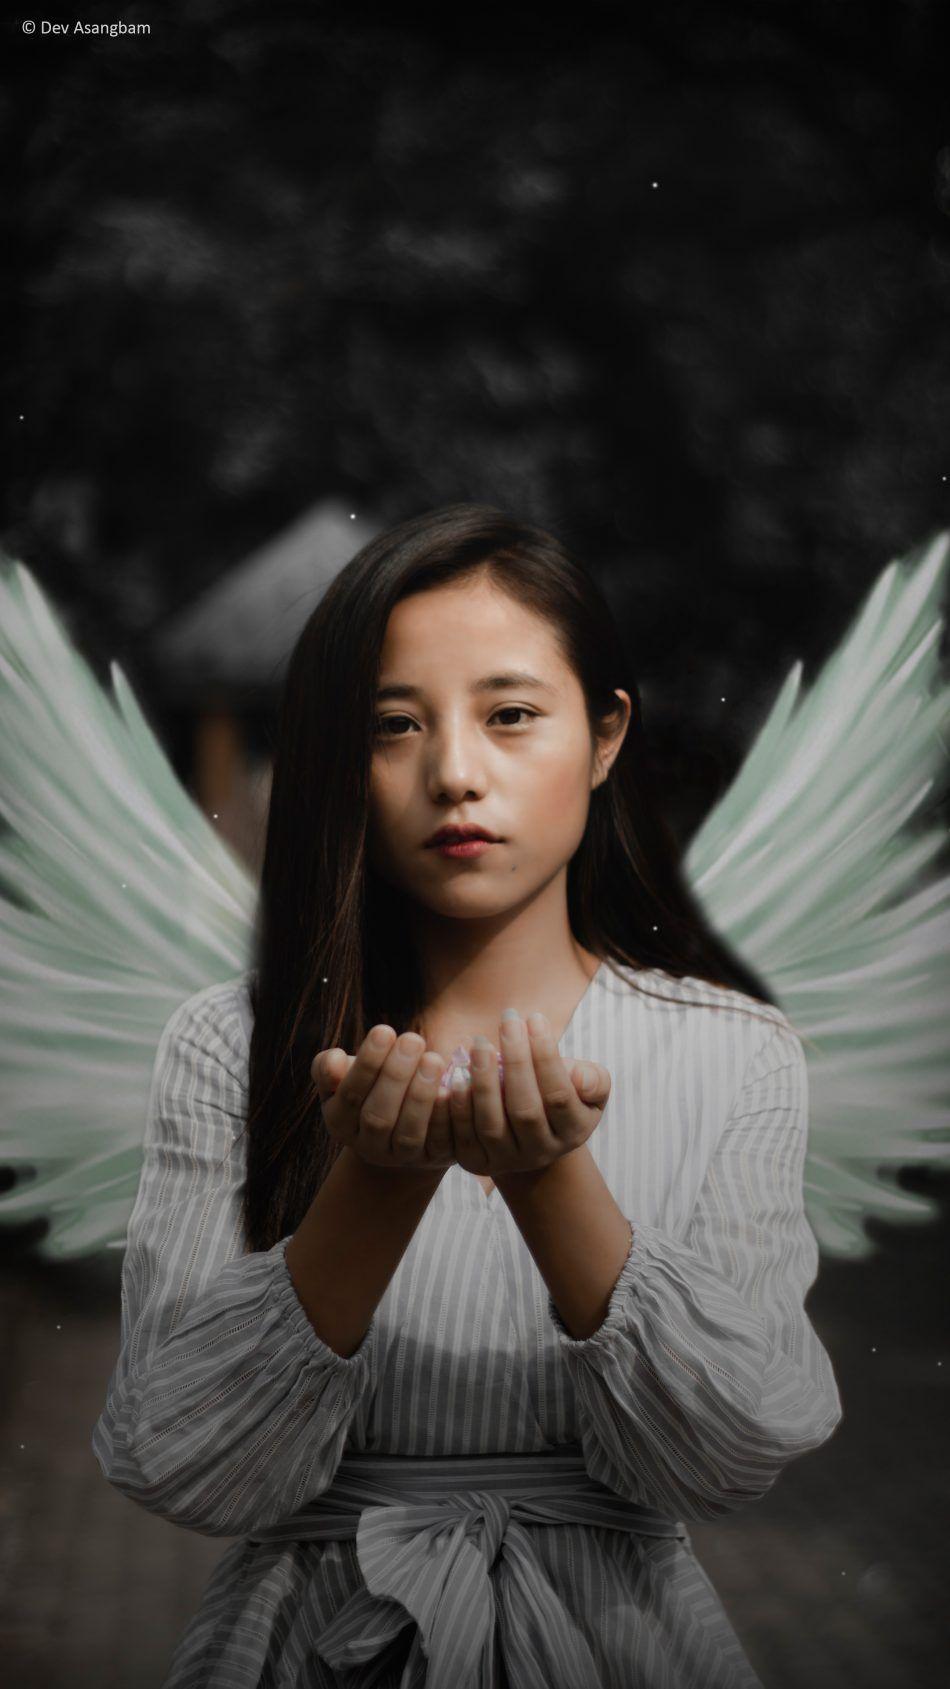 Beautiful Angelic Girl Photography 4K Ultra HD Mobile Wallpaper. Girl photography, Beautiful girl wallpaper, Photography 4k